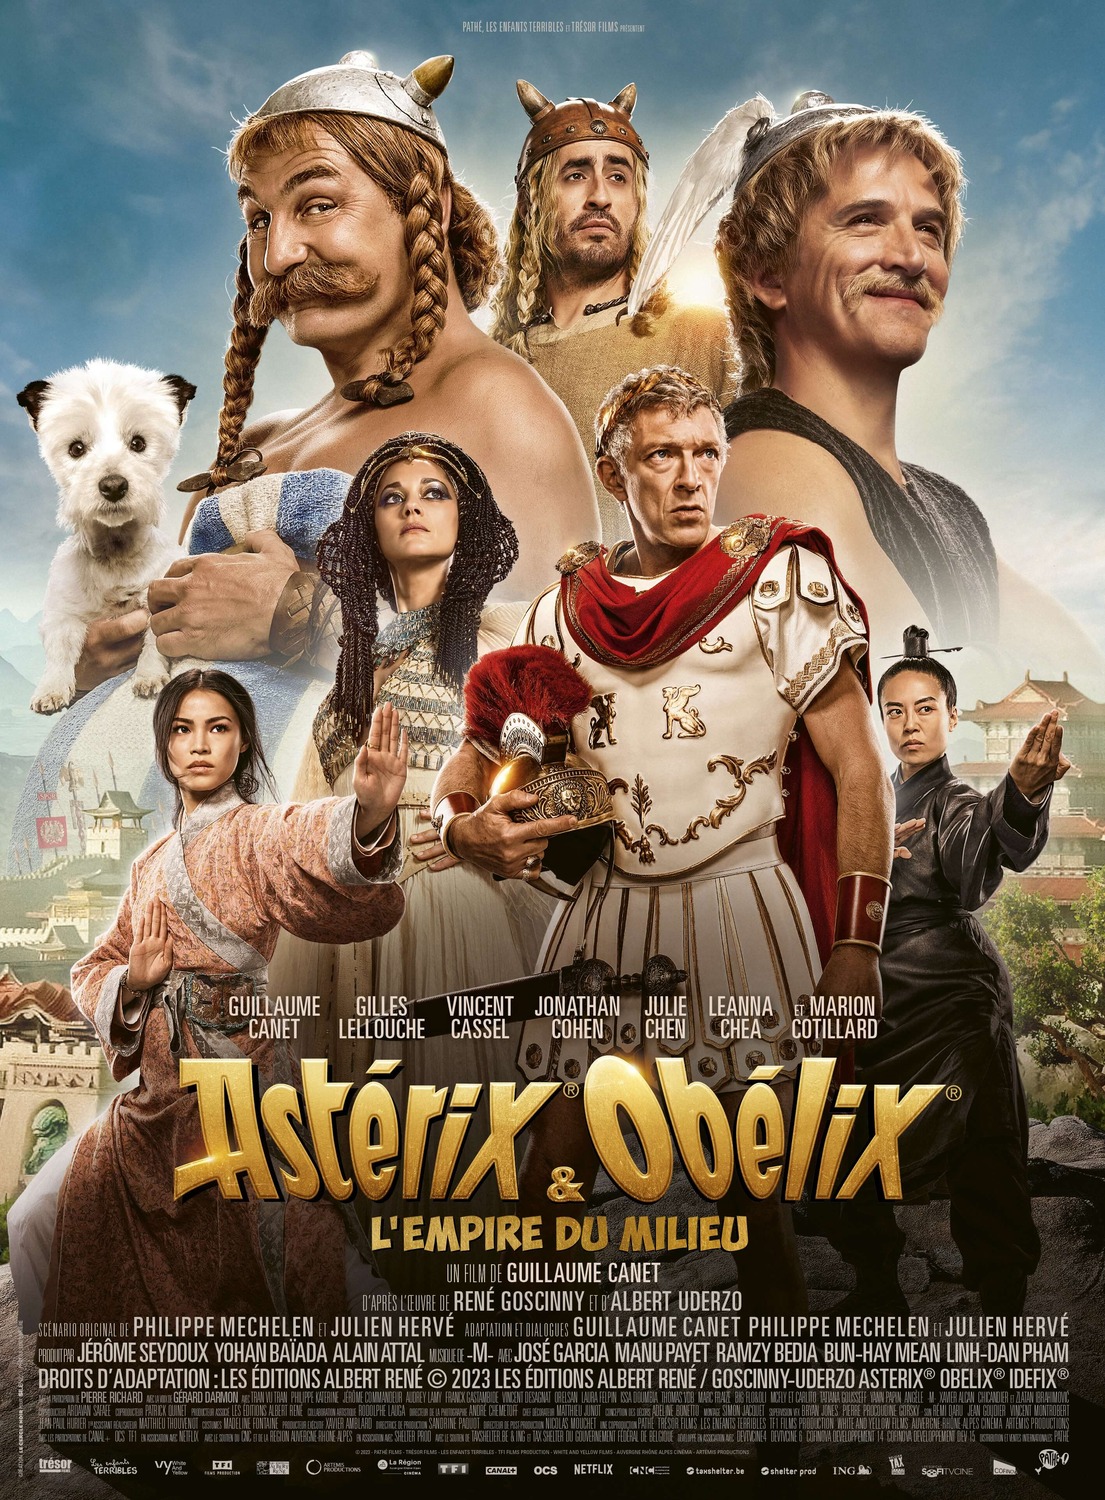 Extra Large Movie Poster Image for Astérix & Obélix: L'Empire du Milieu (#2 of 36)